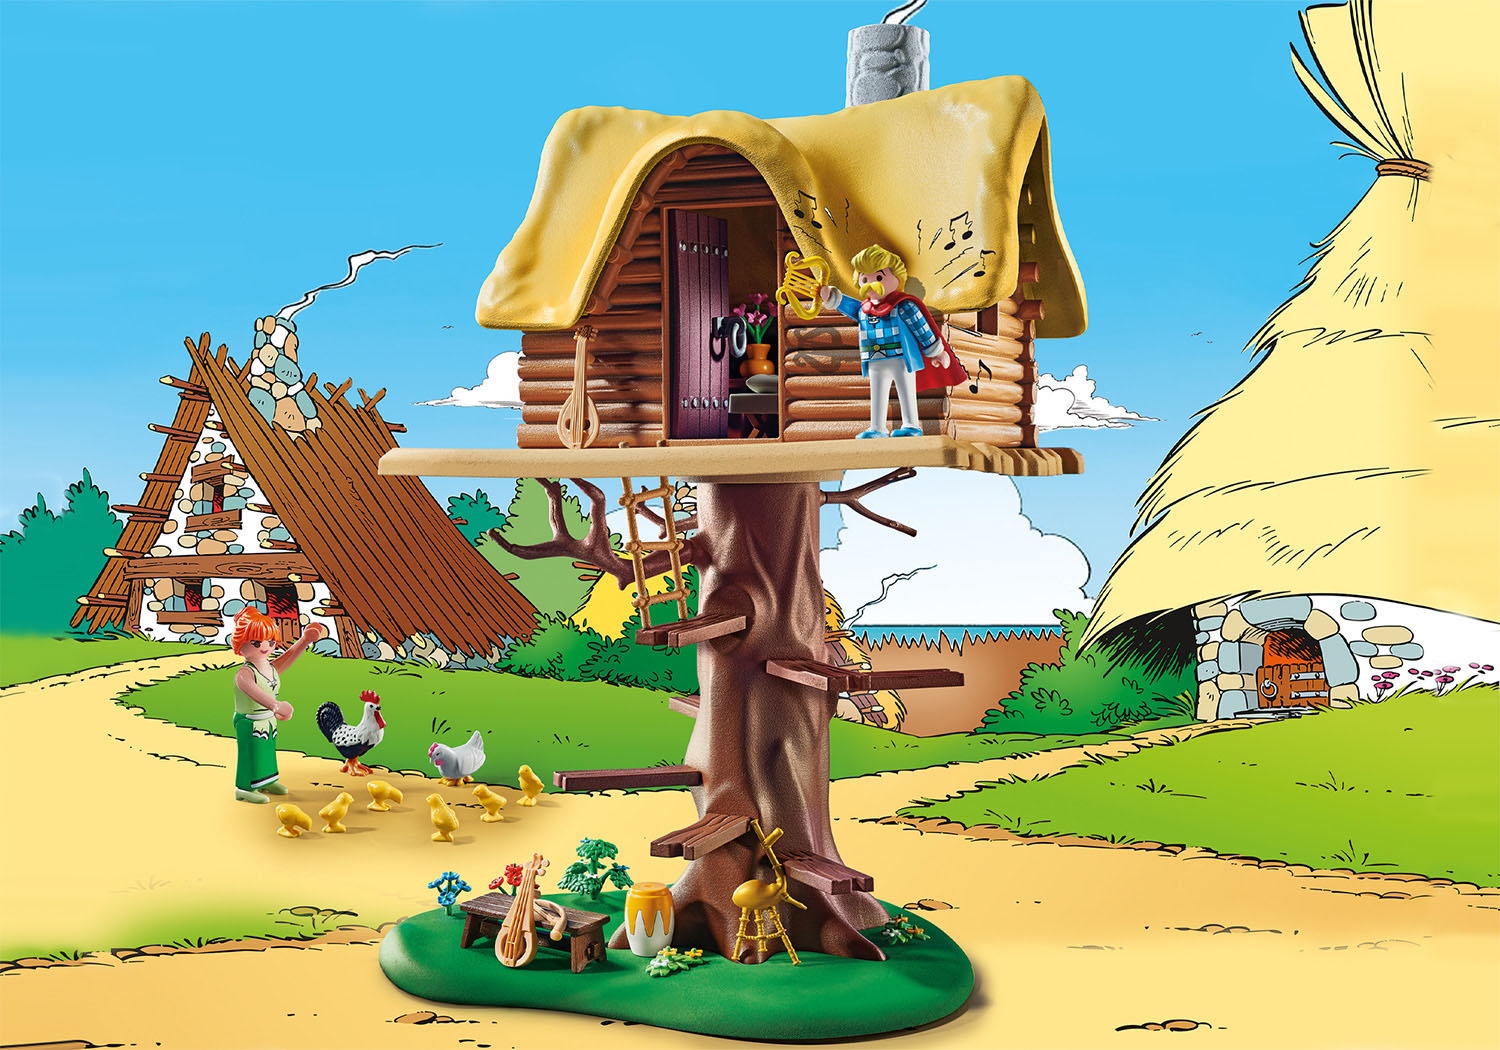 Playmobil® Konstruktions-Spielset »Troubadix mit Baumhaus (71016), Asterix«, (96 St.), Made in Germany